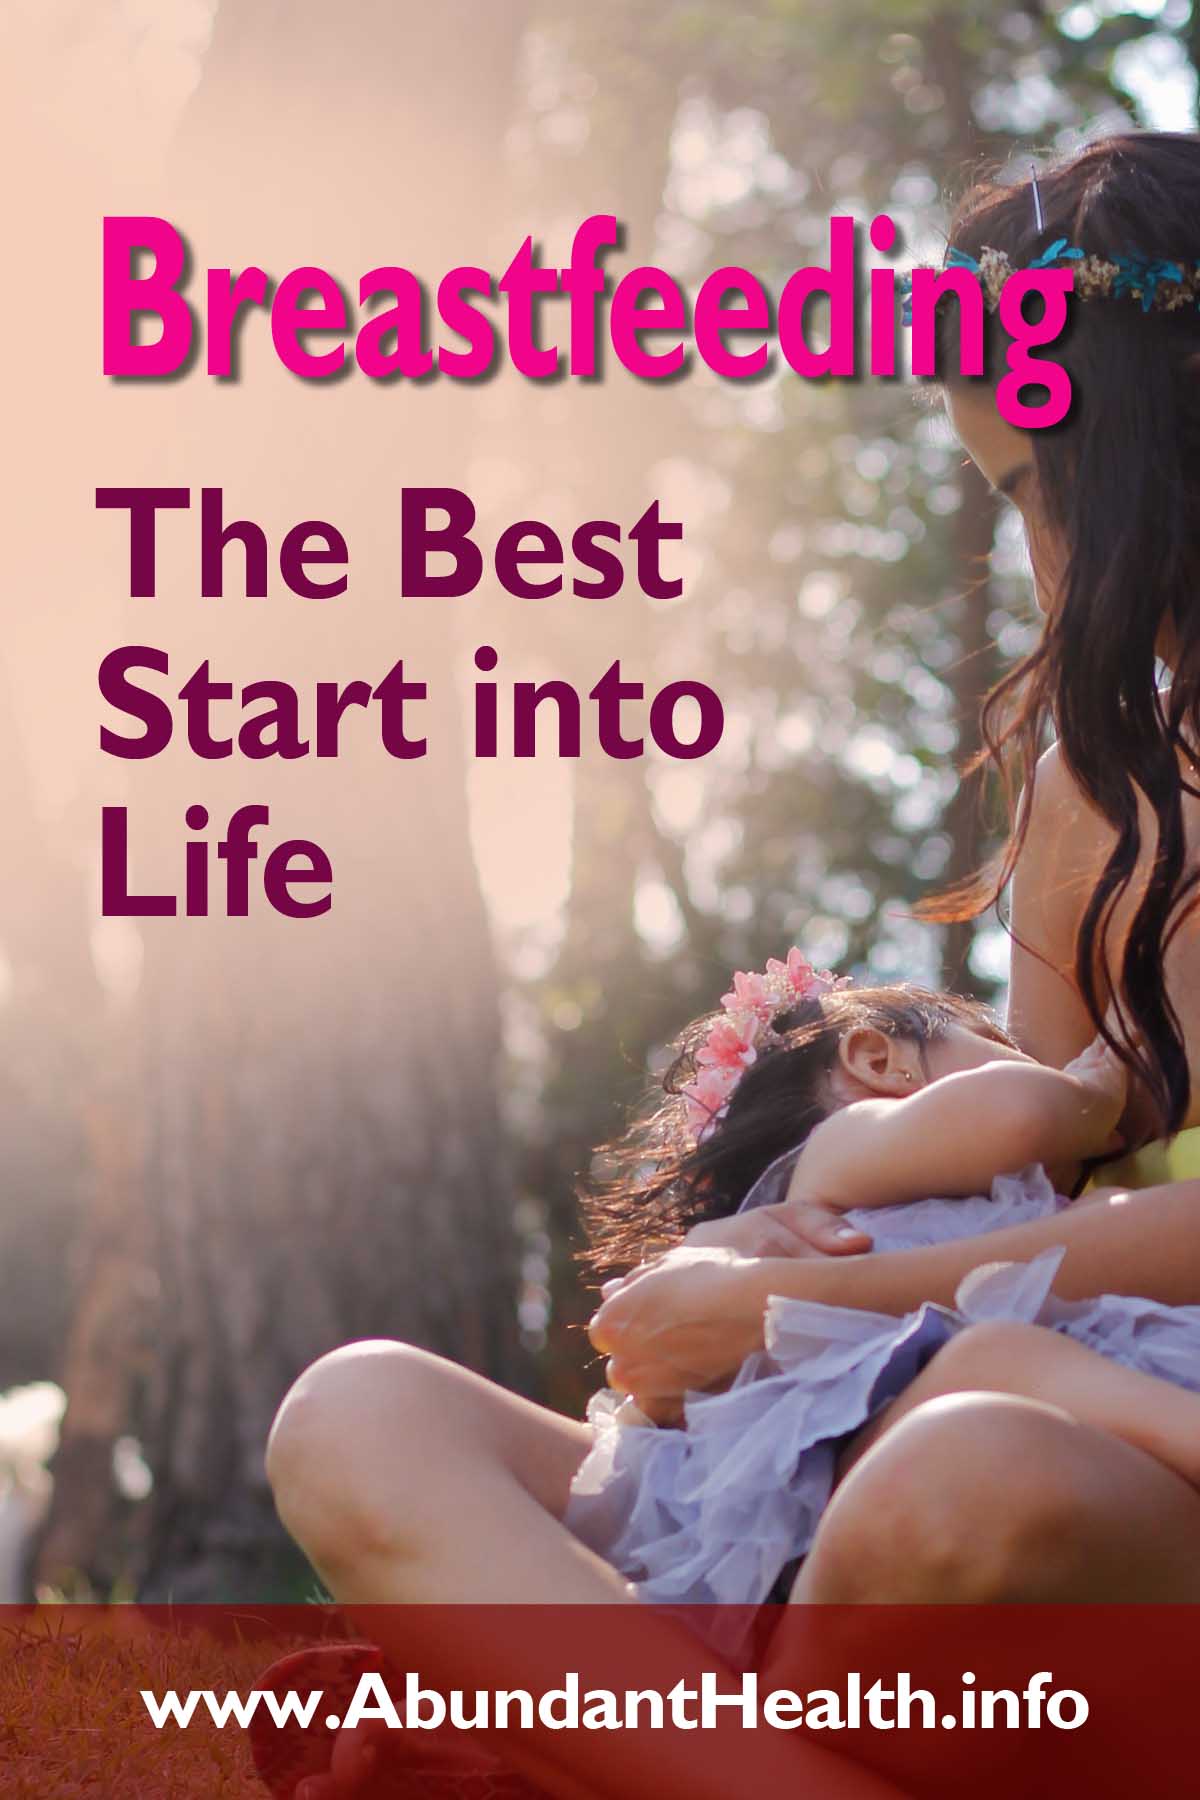 Breastfeeding - The Best Start into Life